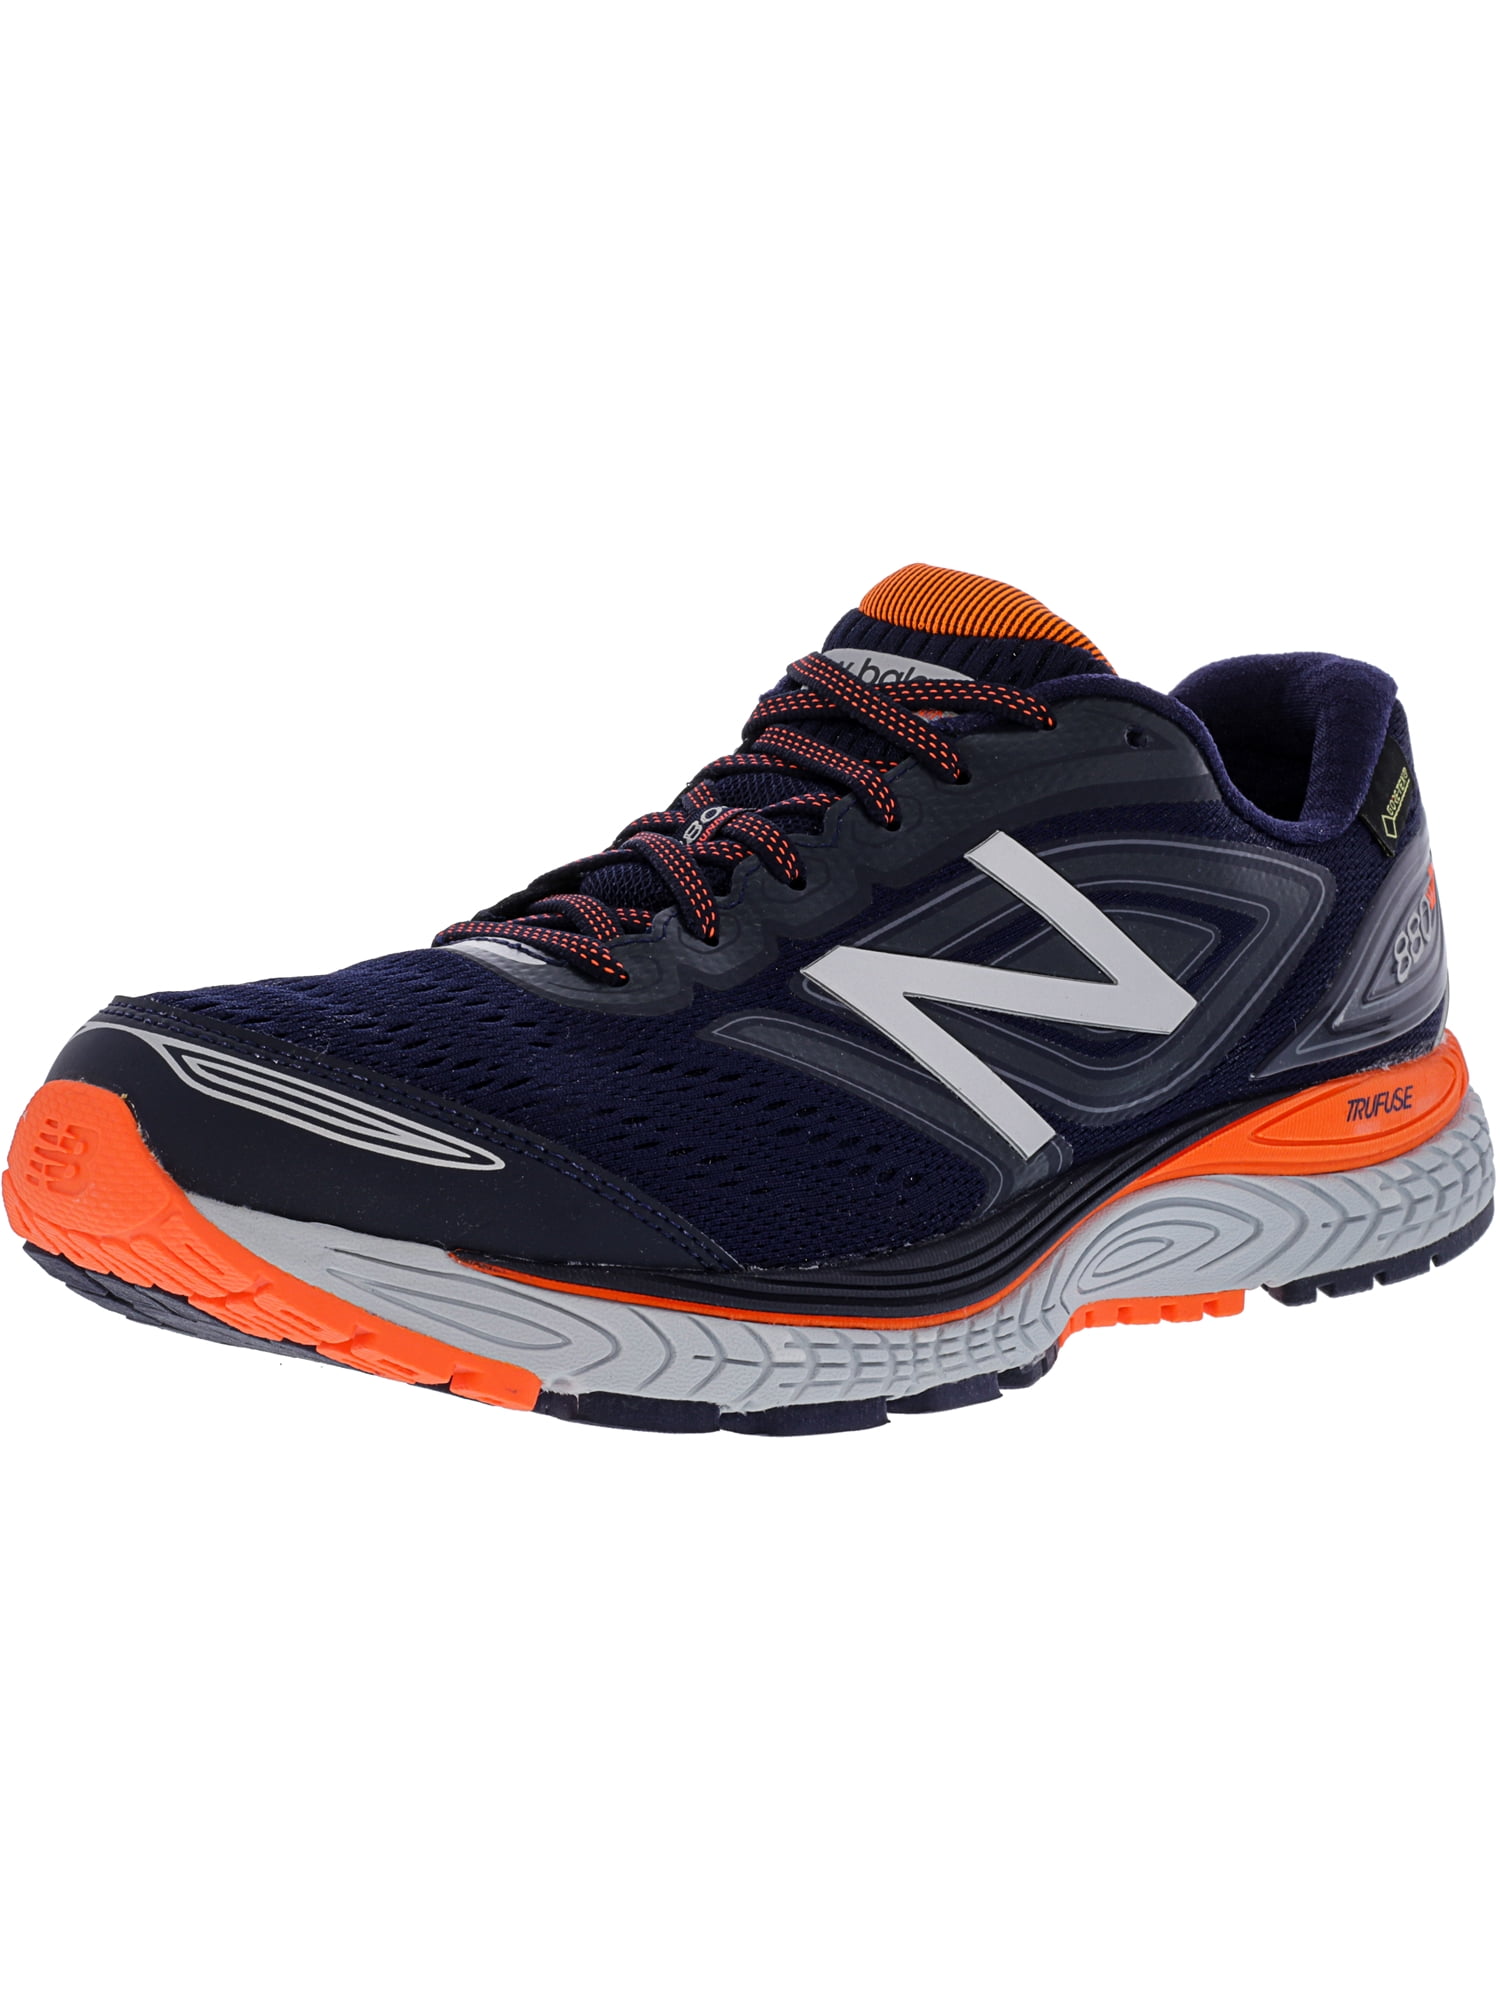 New Balance Men's M880 Bx7 Ankle-High Running Shoe - 10W